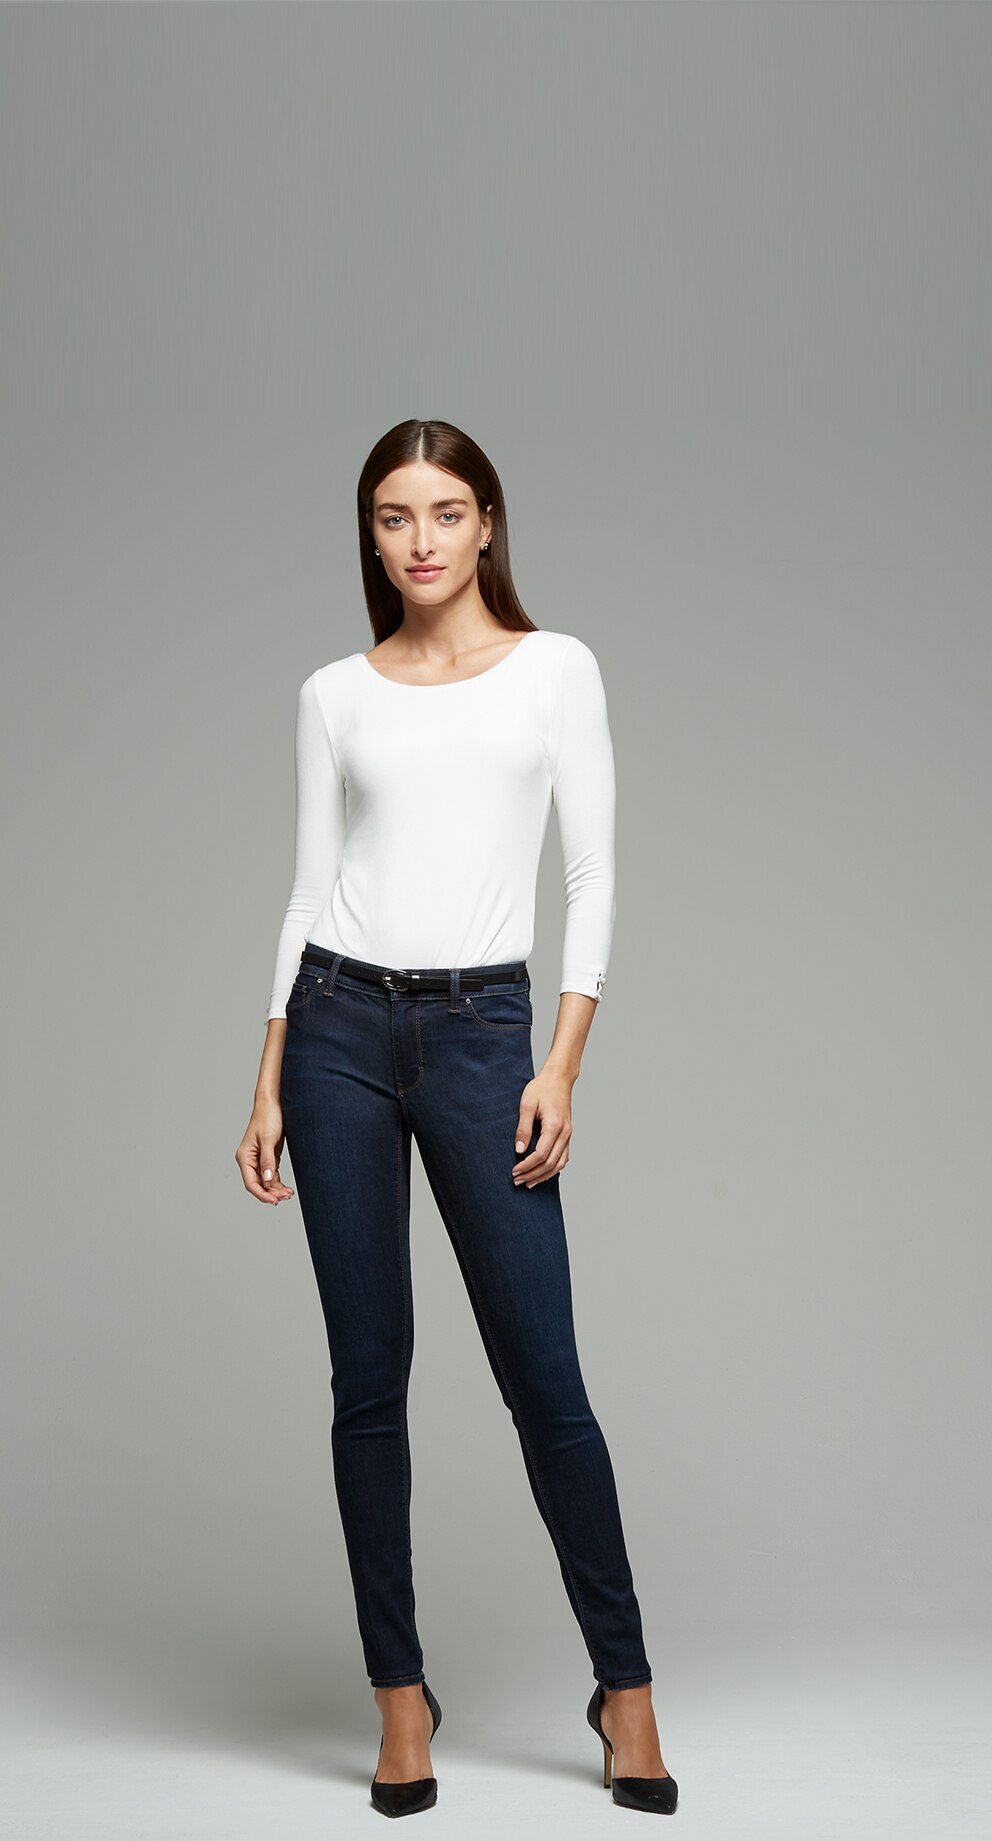 Shop Jeans For Women - Skinny, Bootcut, Leggings & More - White House ...